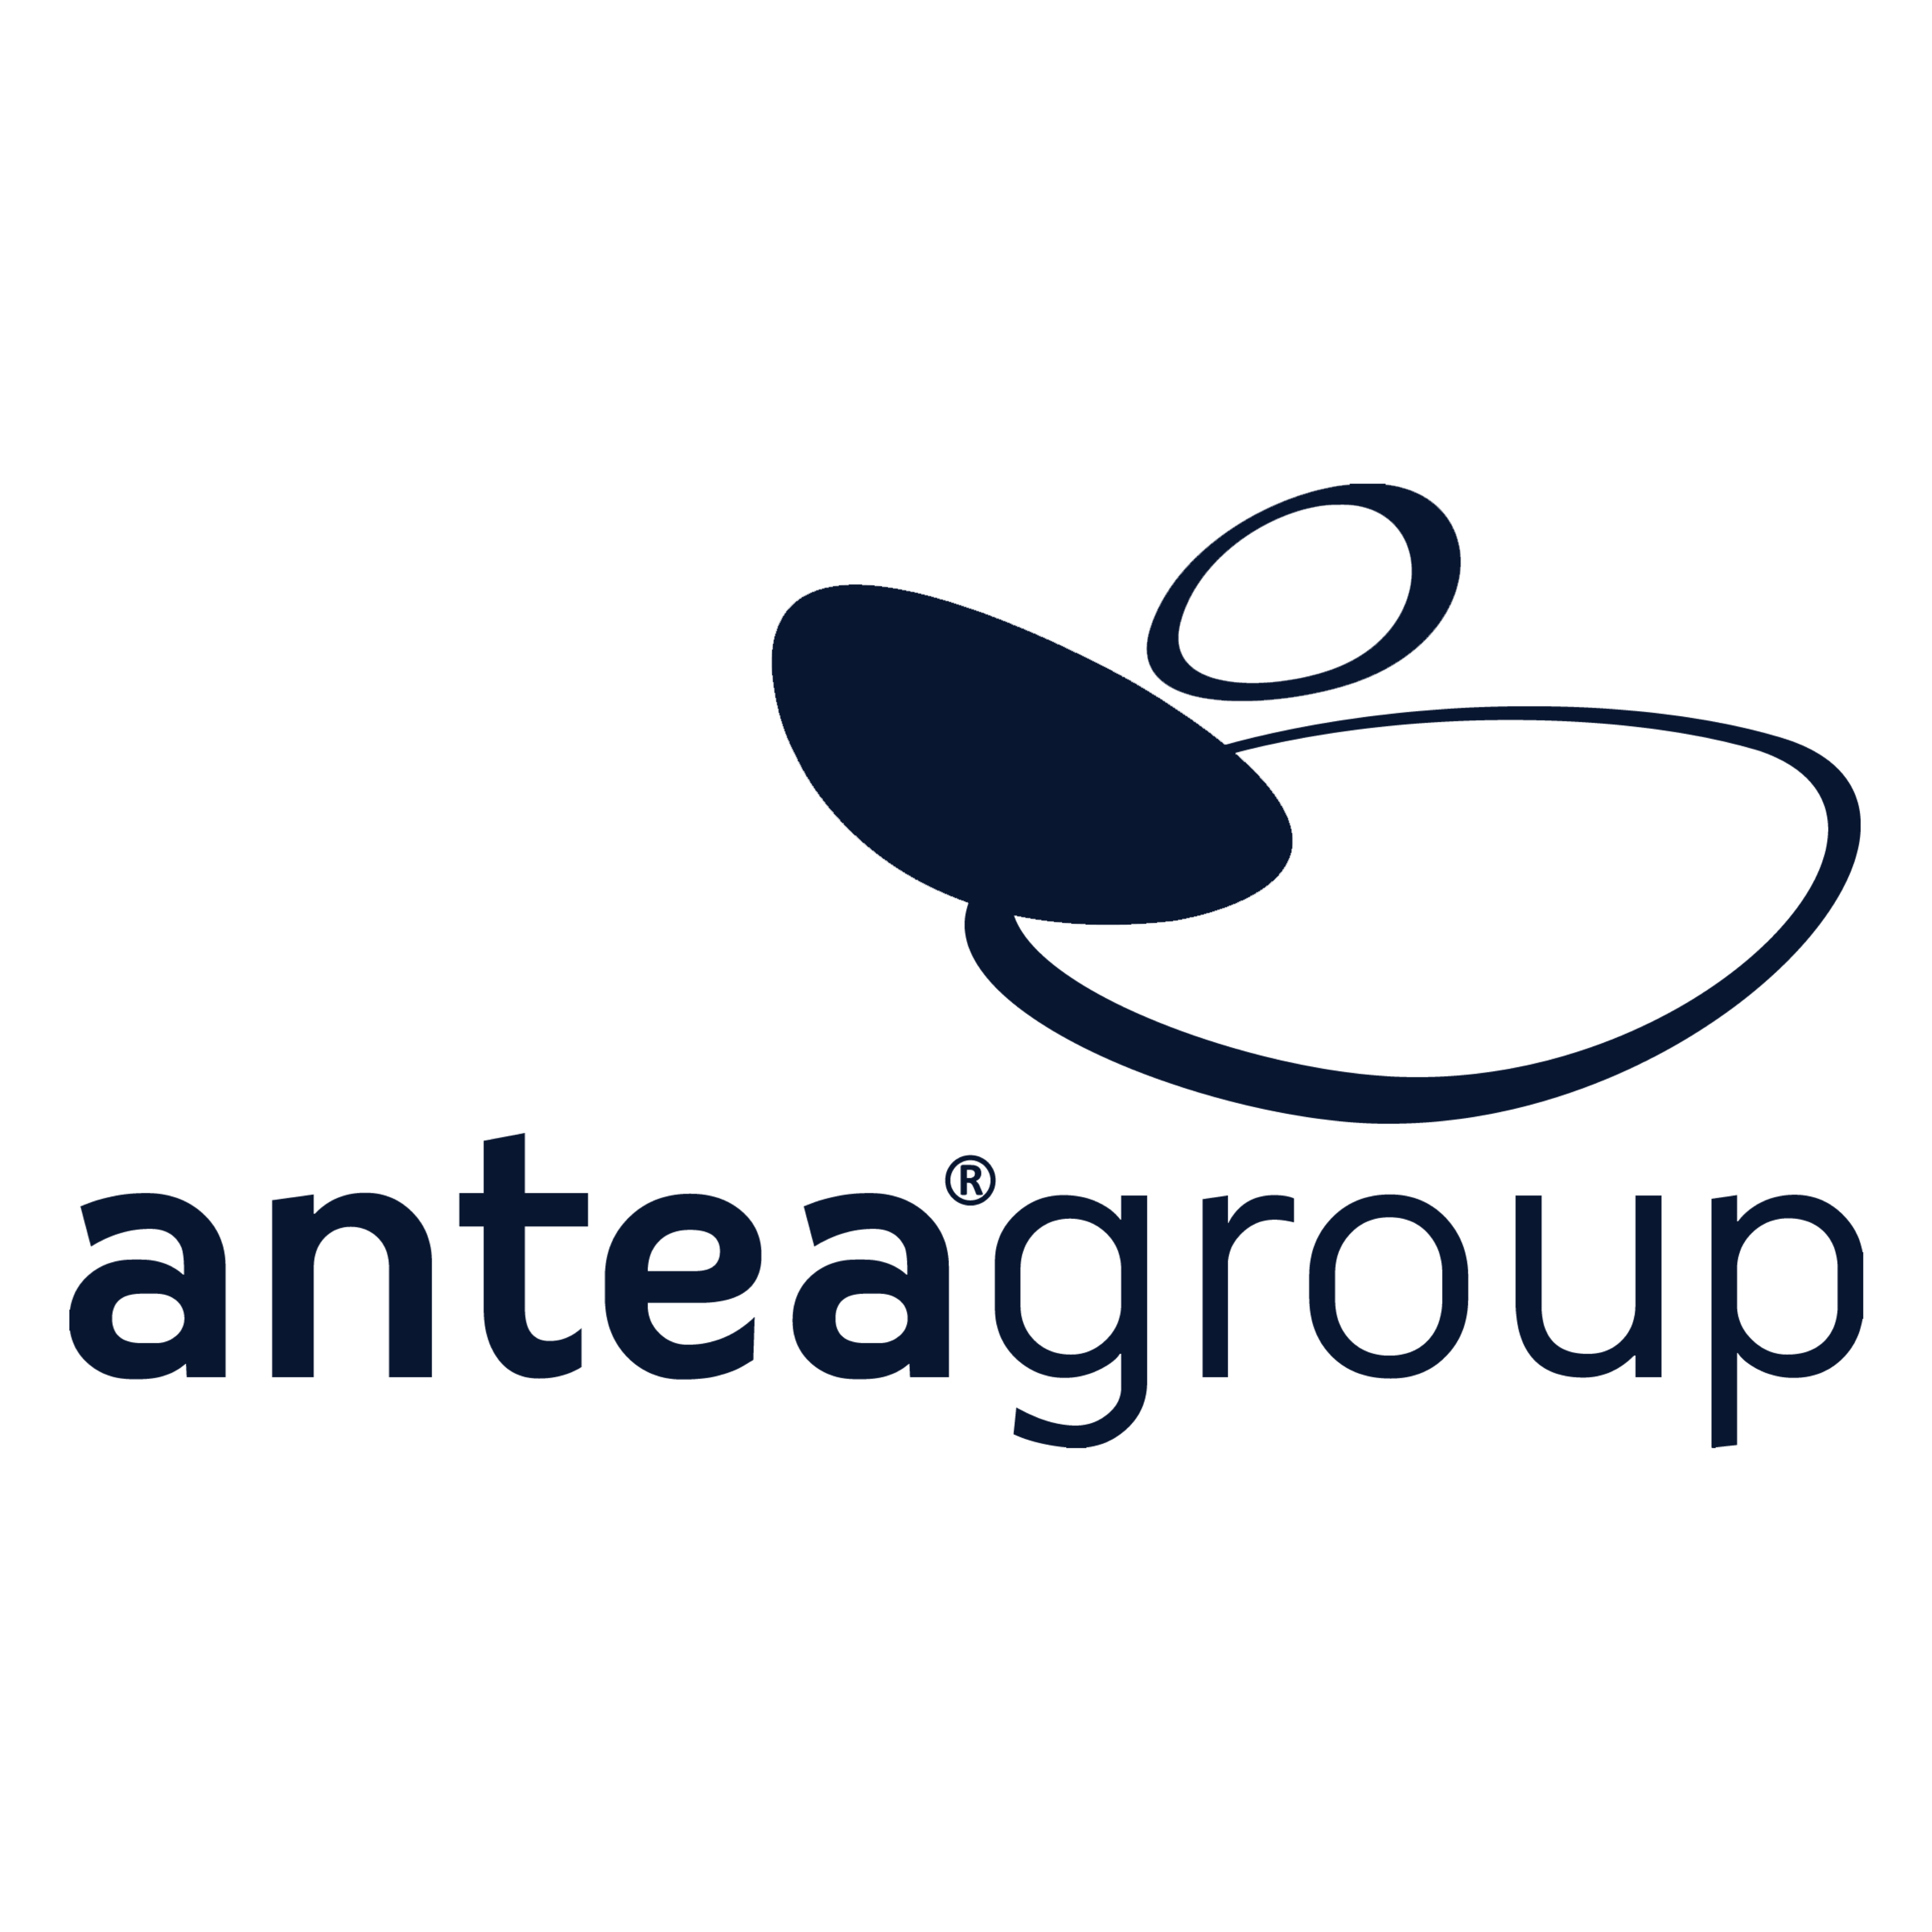 Logo Anteagroup